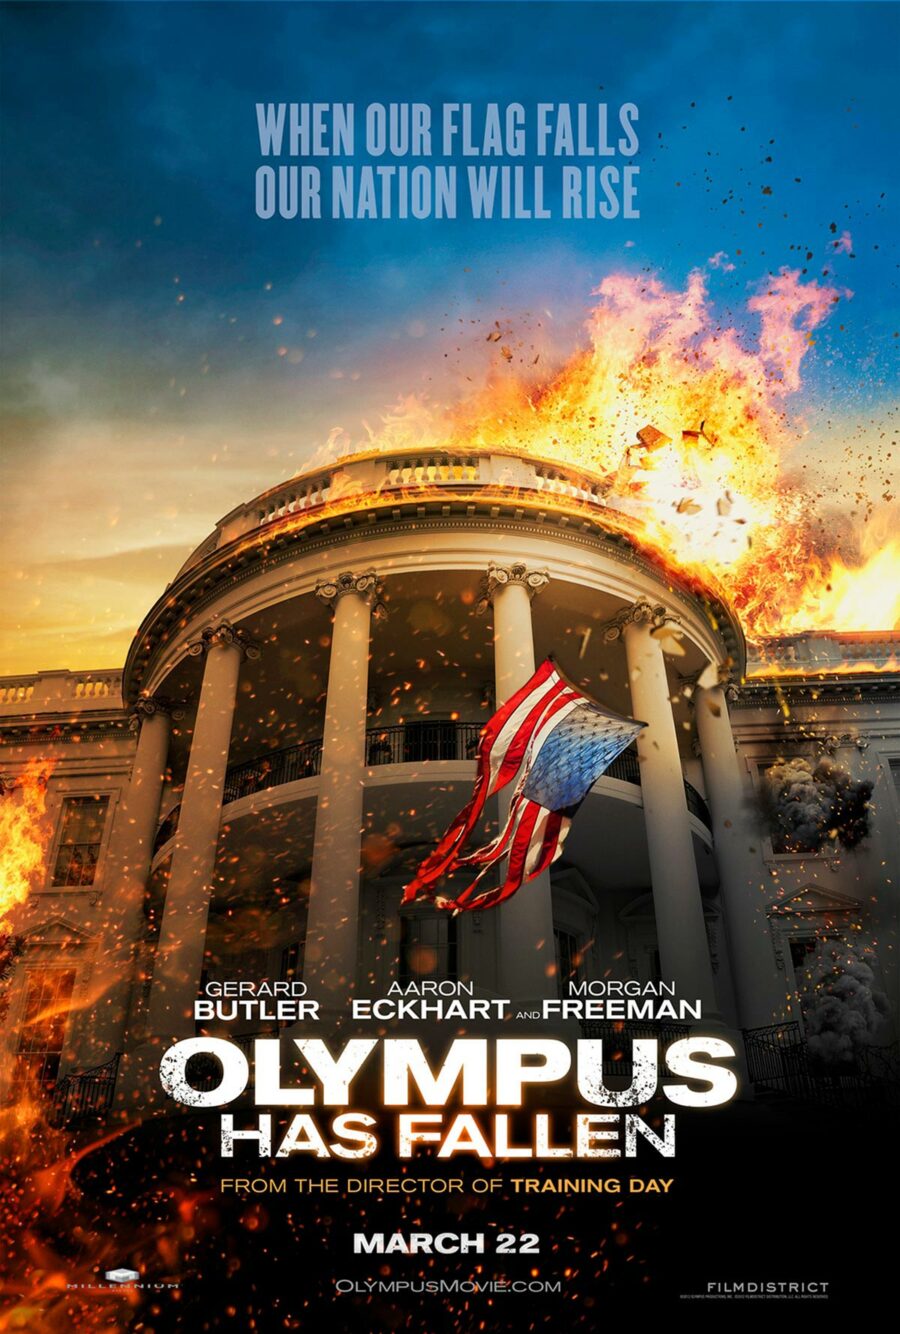 olympus has fallen dvd cover art